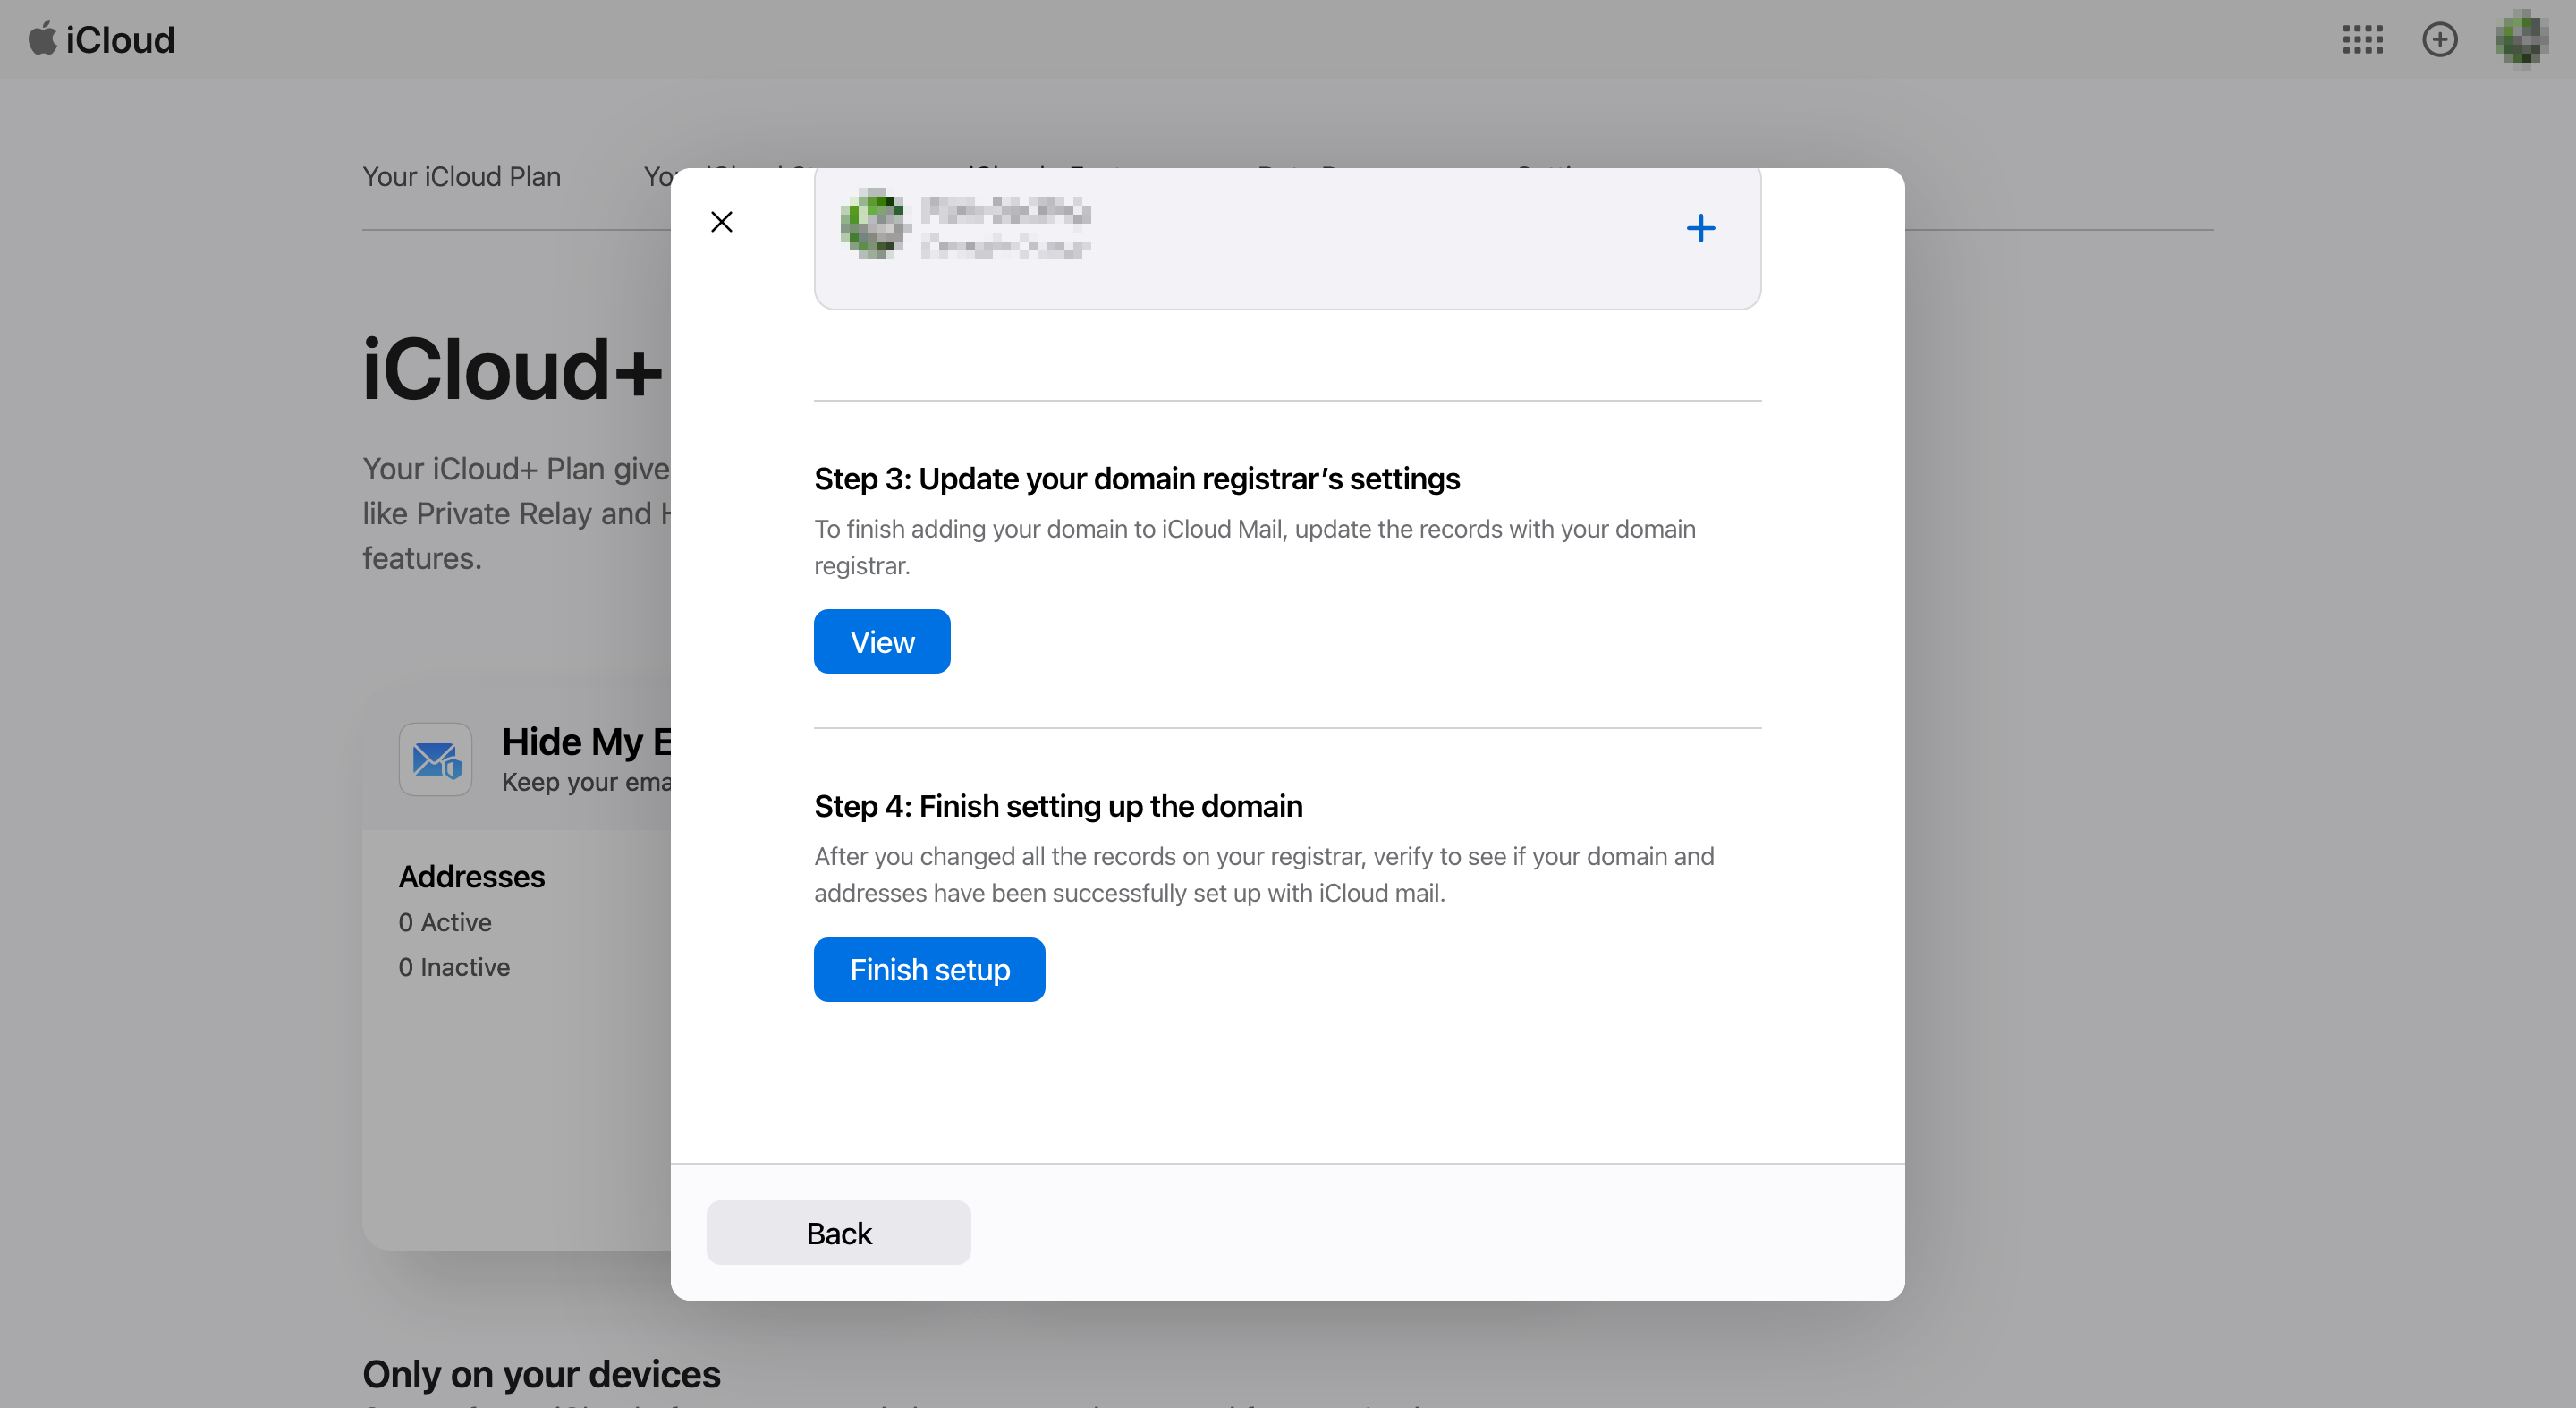 iCloud Mail: Domain registrar settings